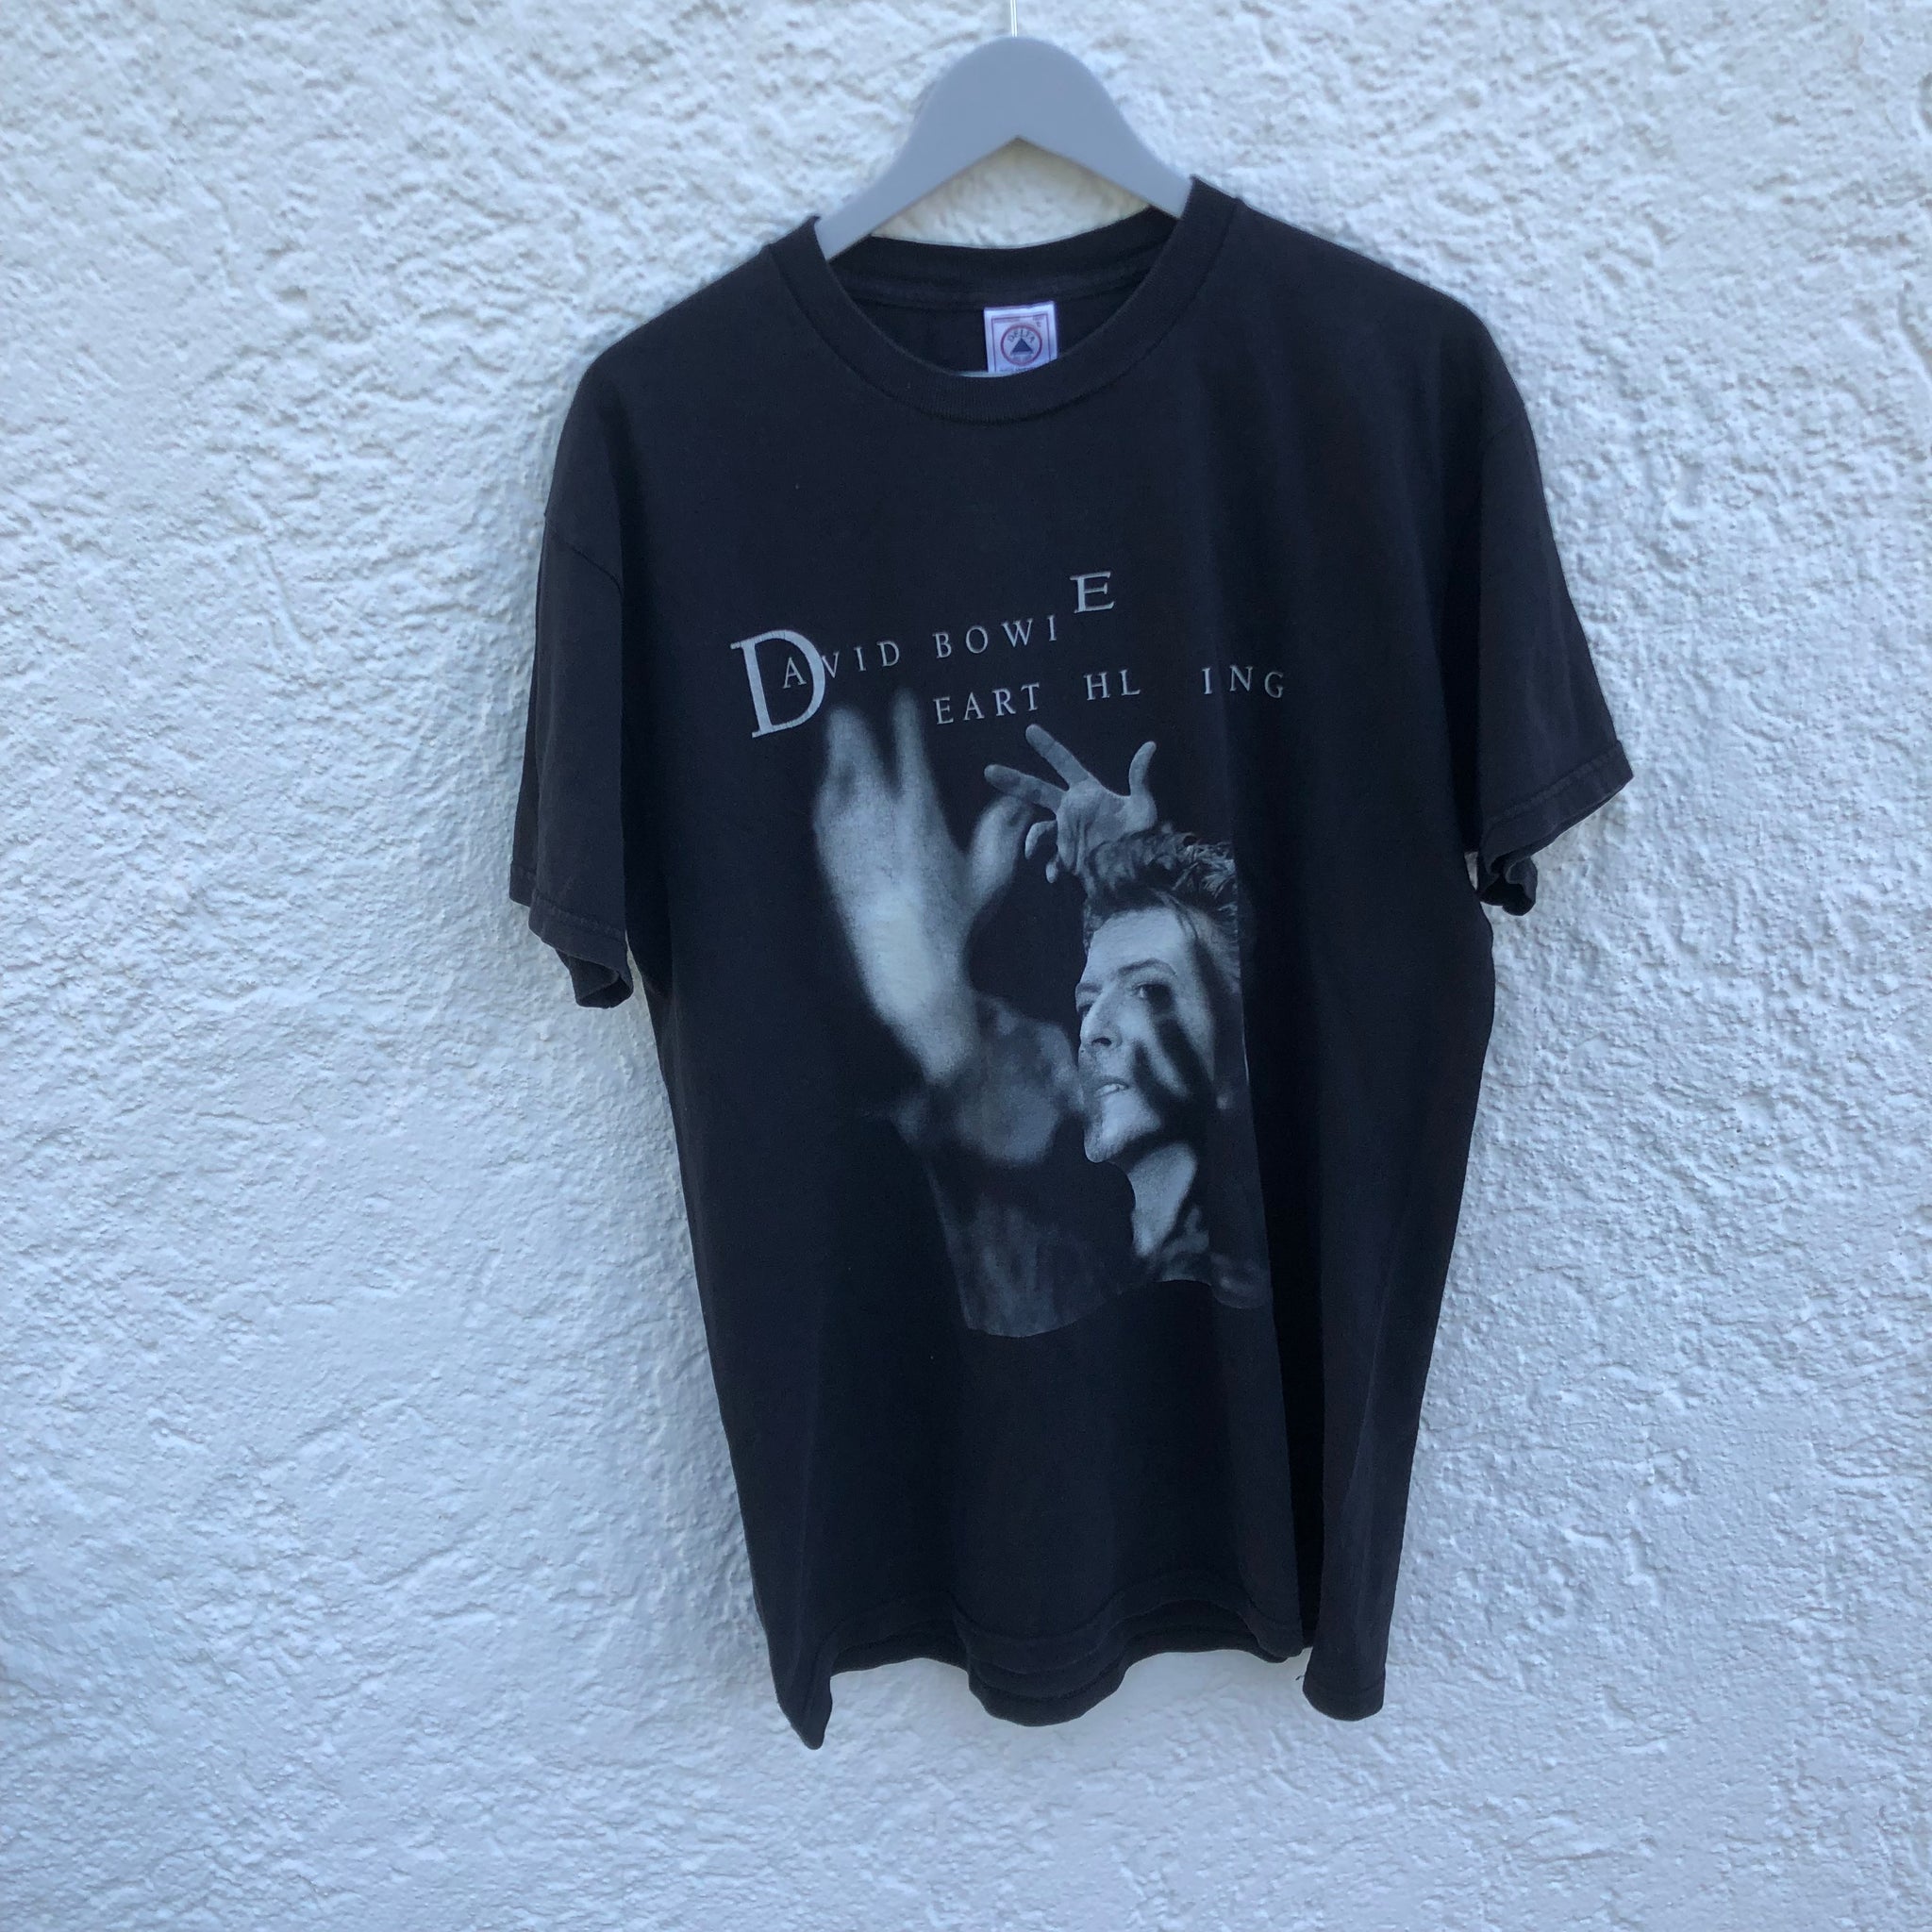 Vintage Black David Bowie "Earthling" T-Shirt 1997 Tee